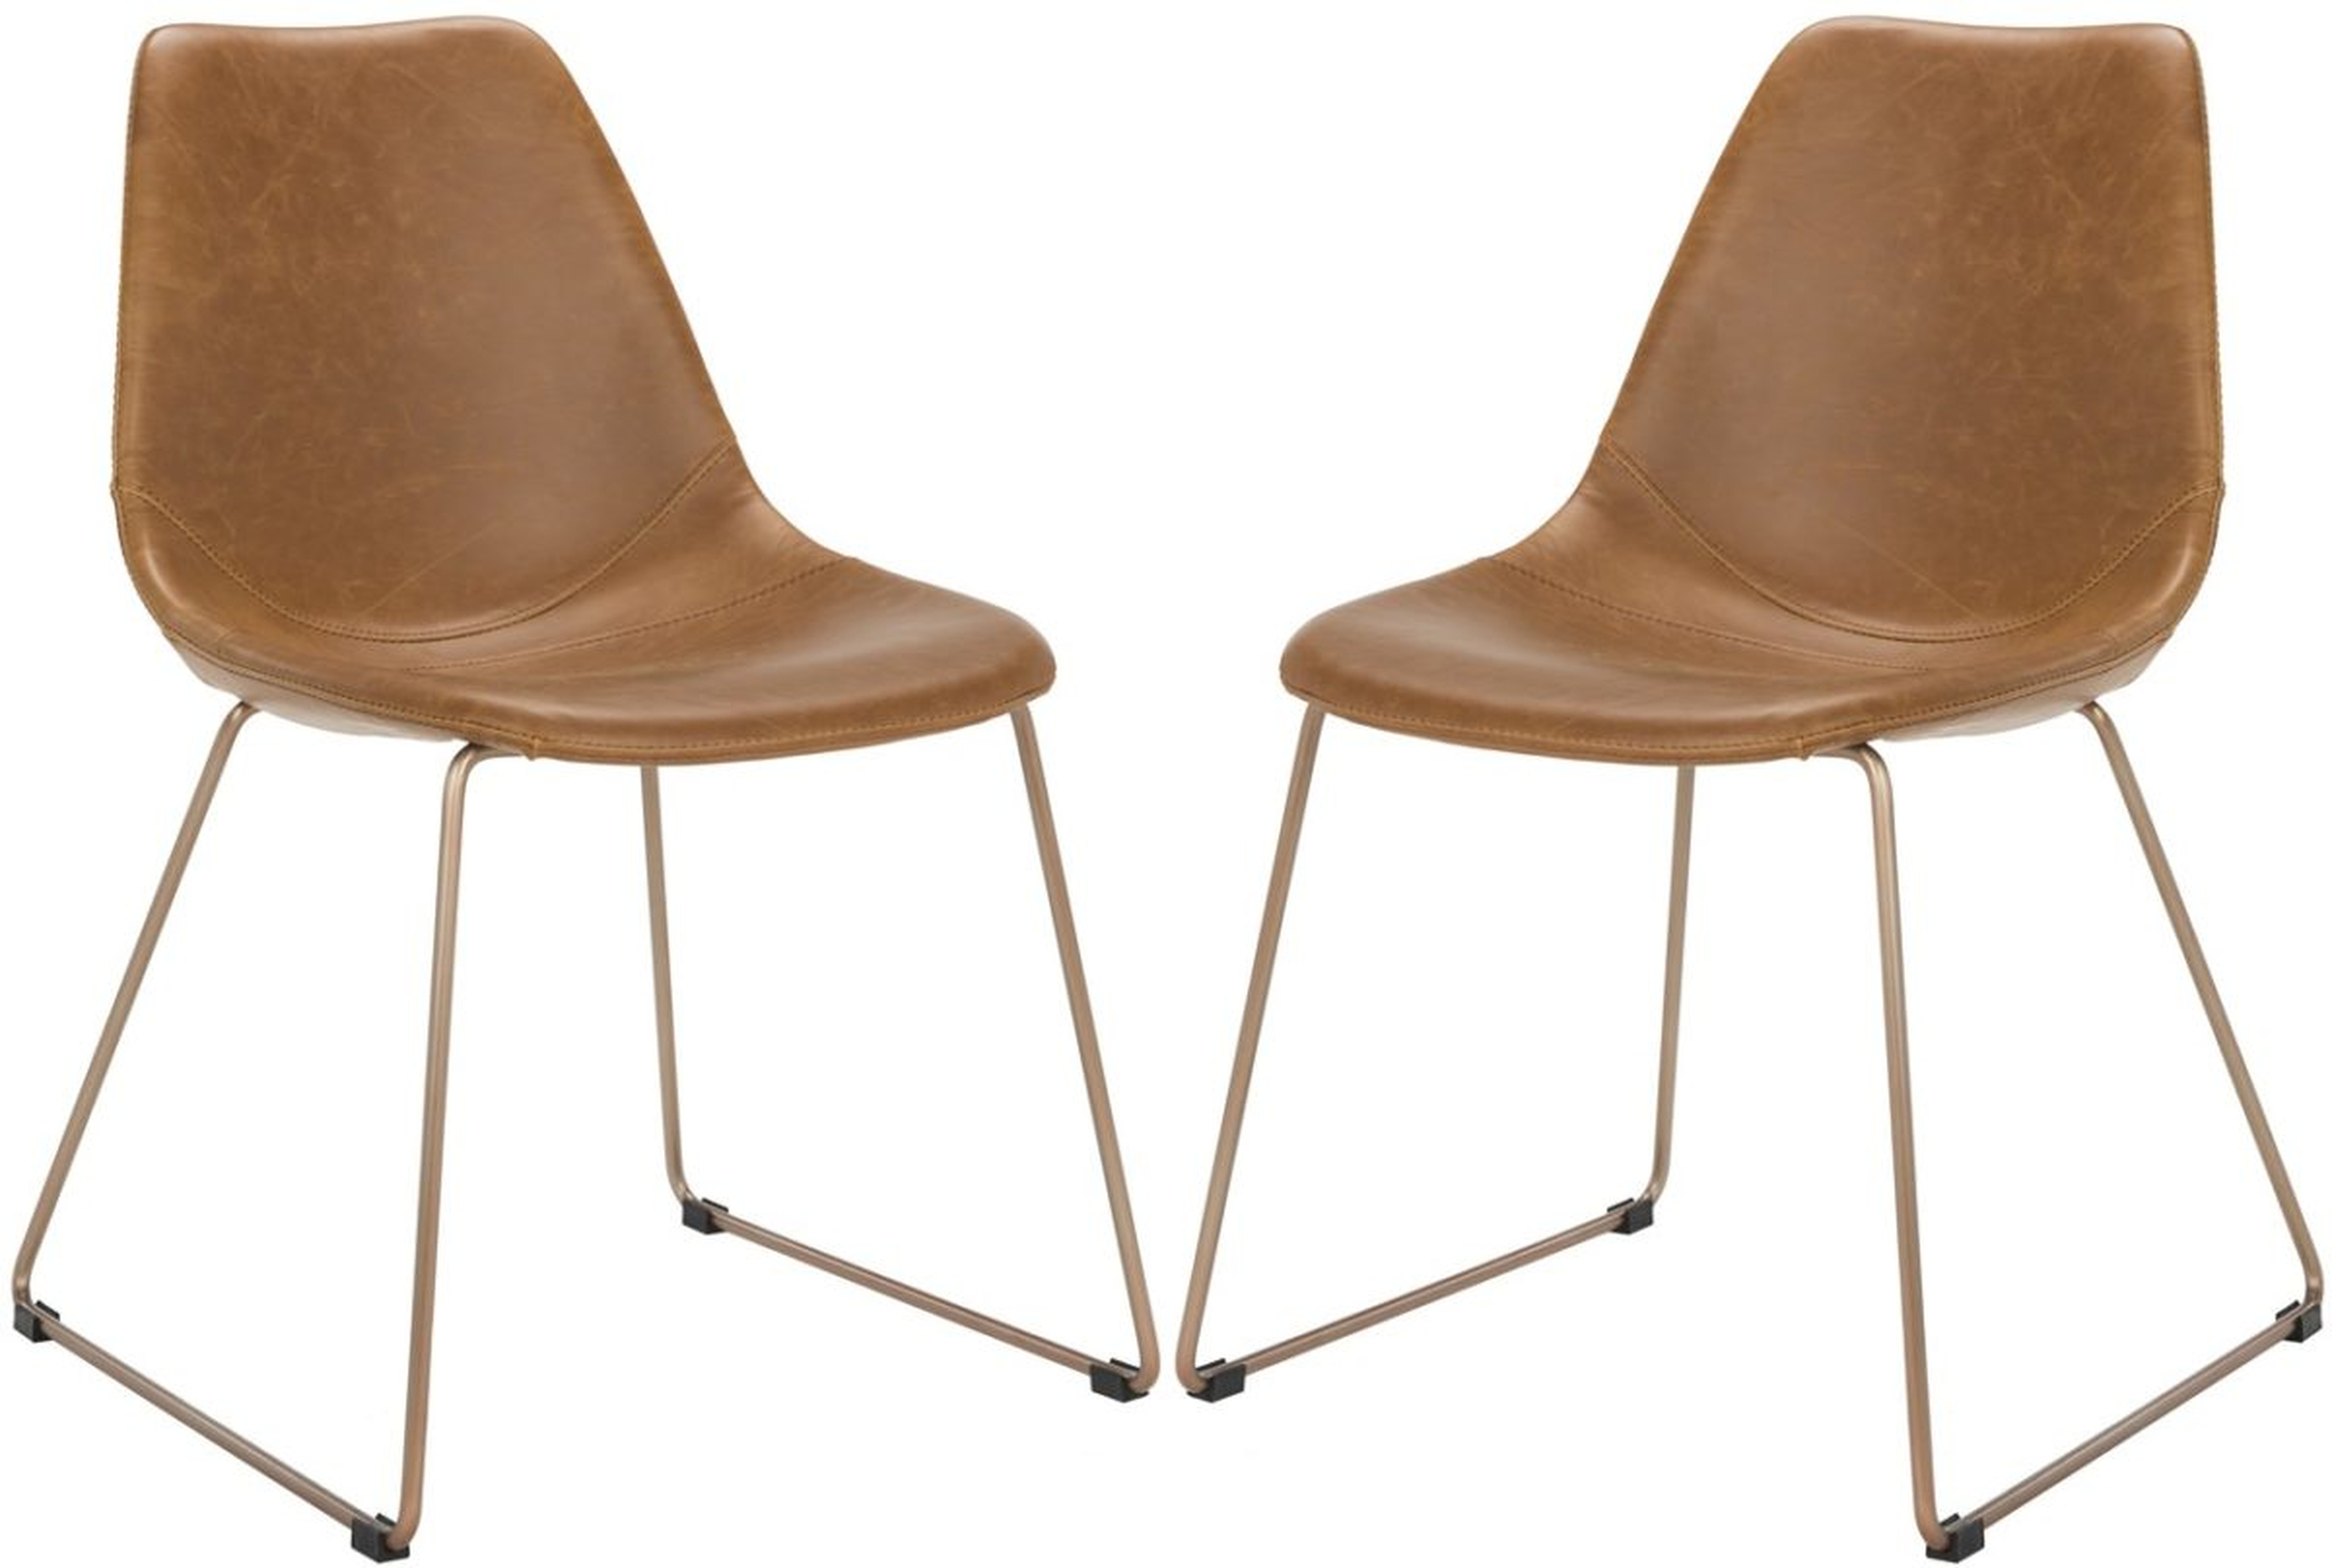 Dorian Midcentury Modern Dining Chair - Light Brown - Arlo Home - Arlo Home